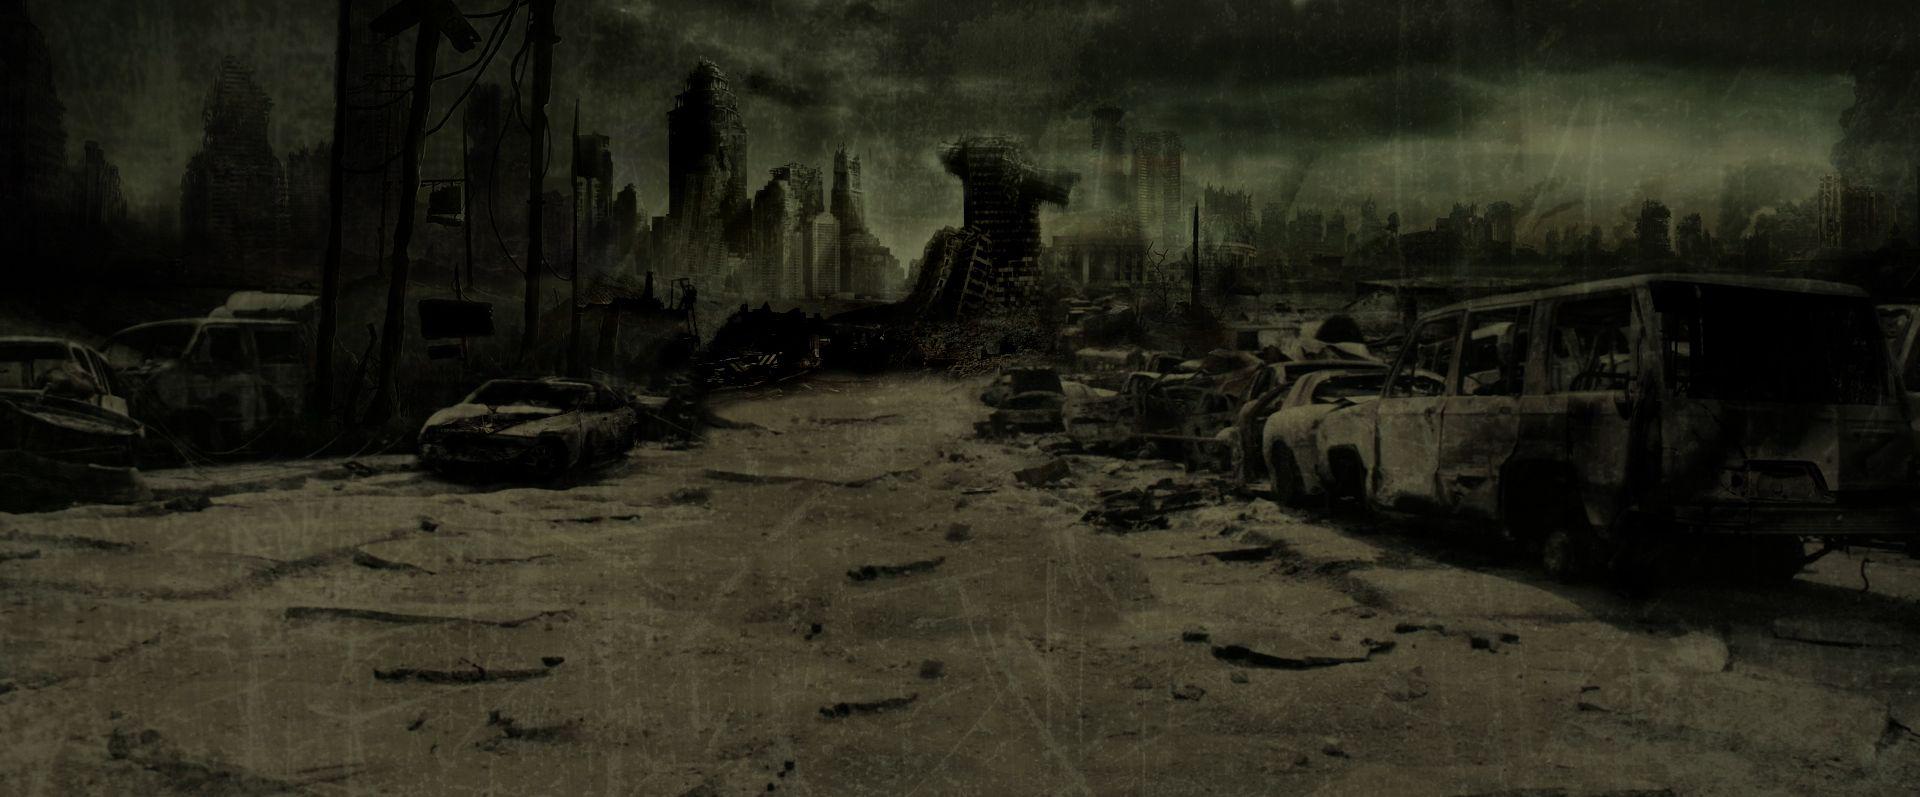 Apocalypse. Artwork made for Croatian band Disasterpiece